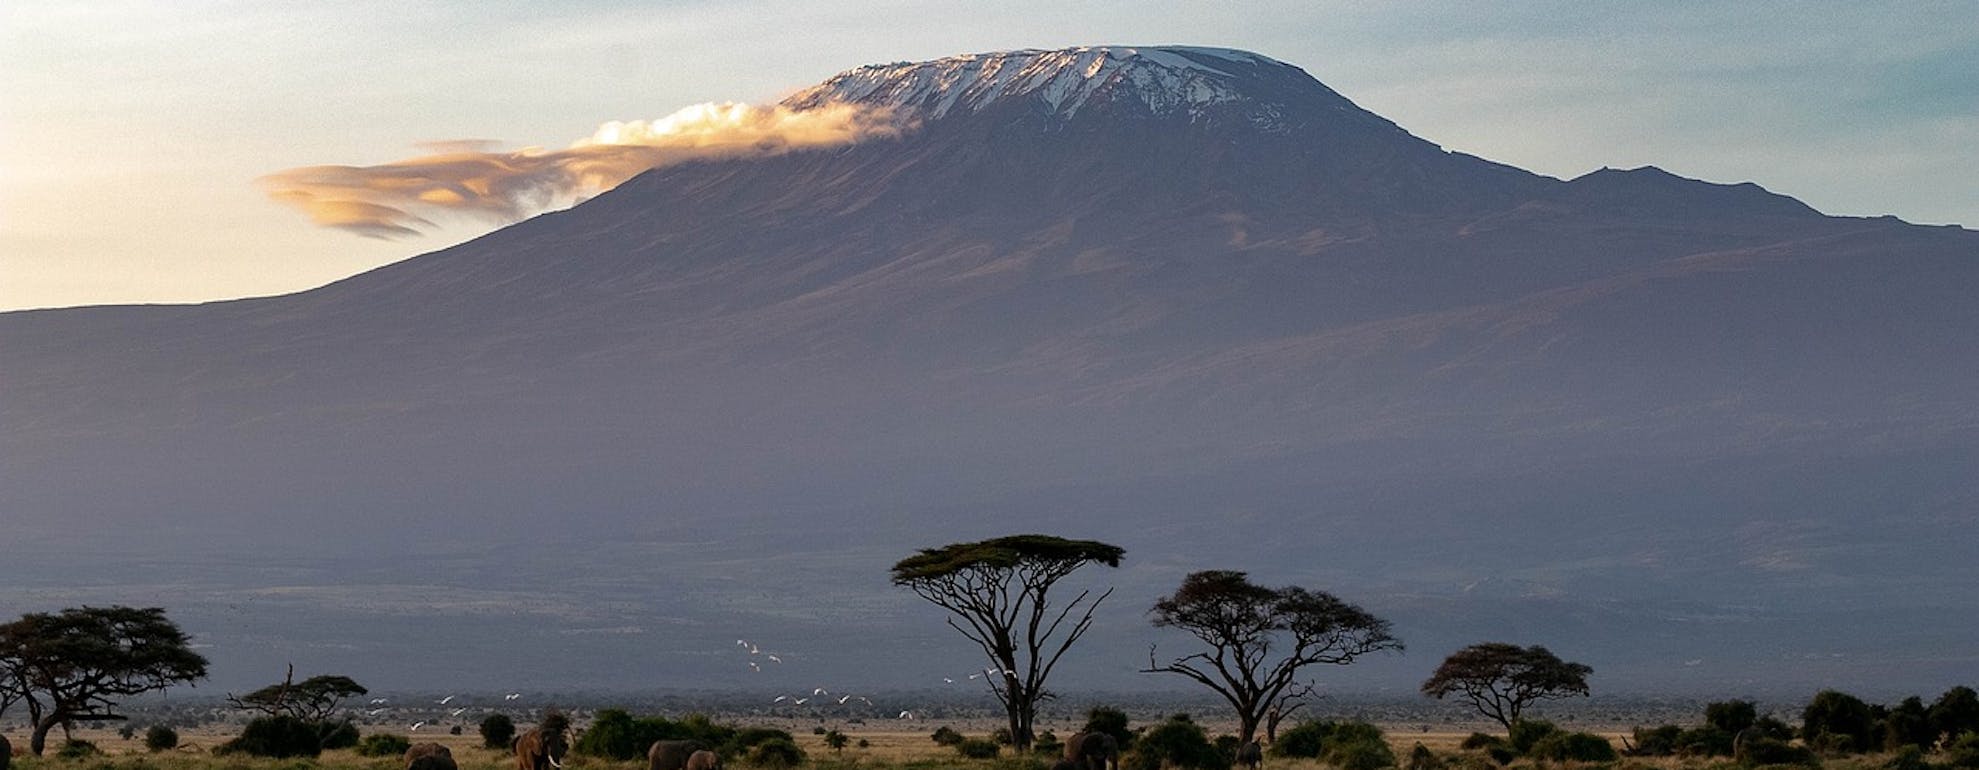 Trekking sul Kilimangiaro